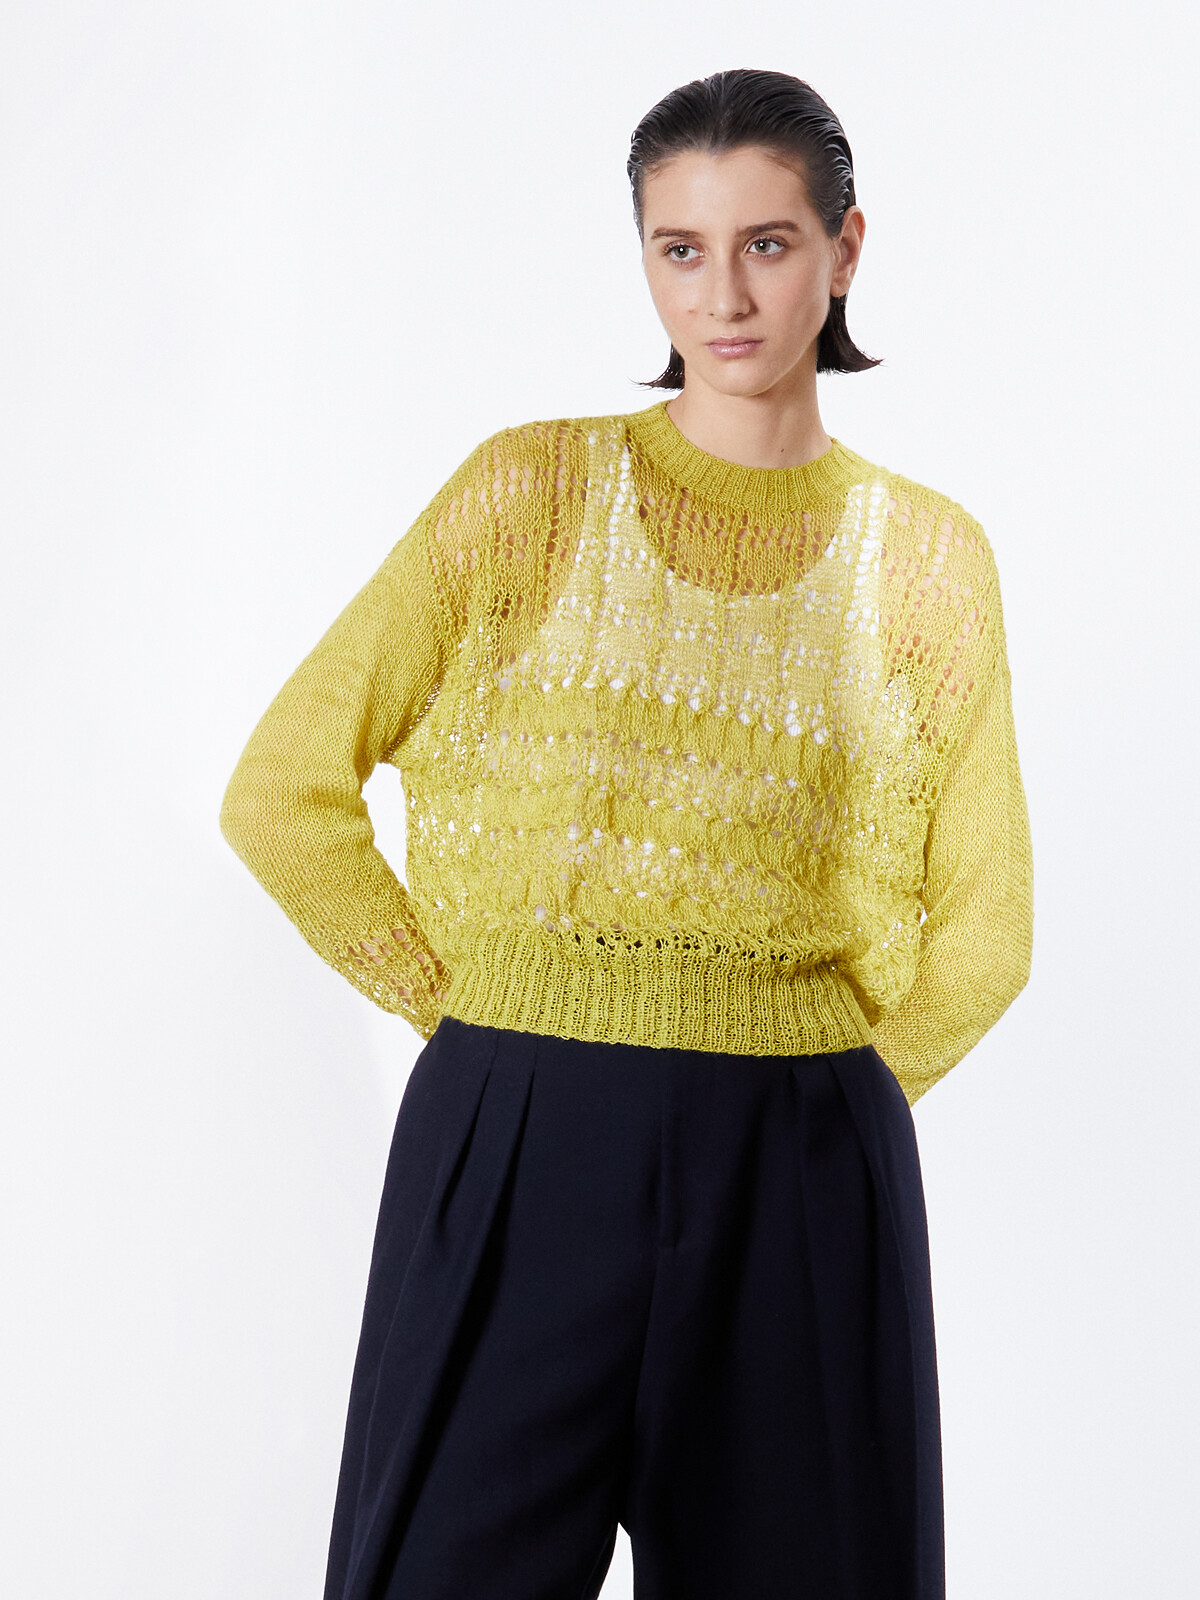 Lacy stitch sweater